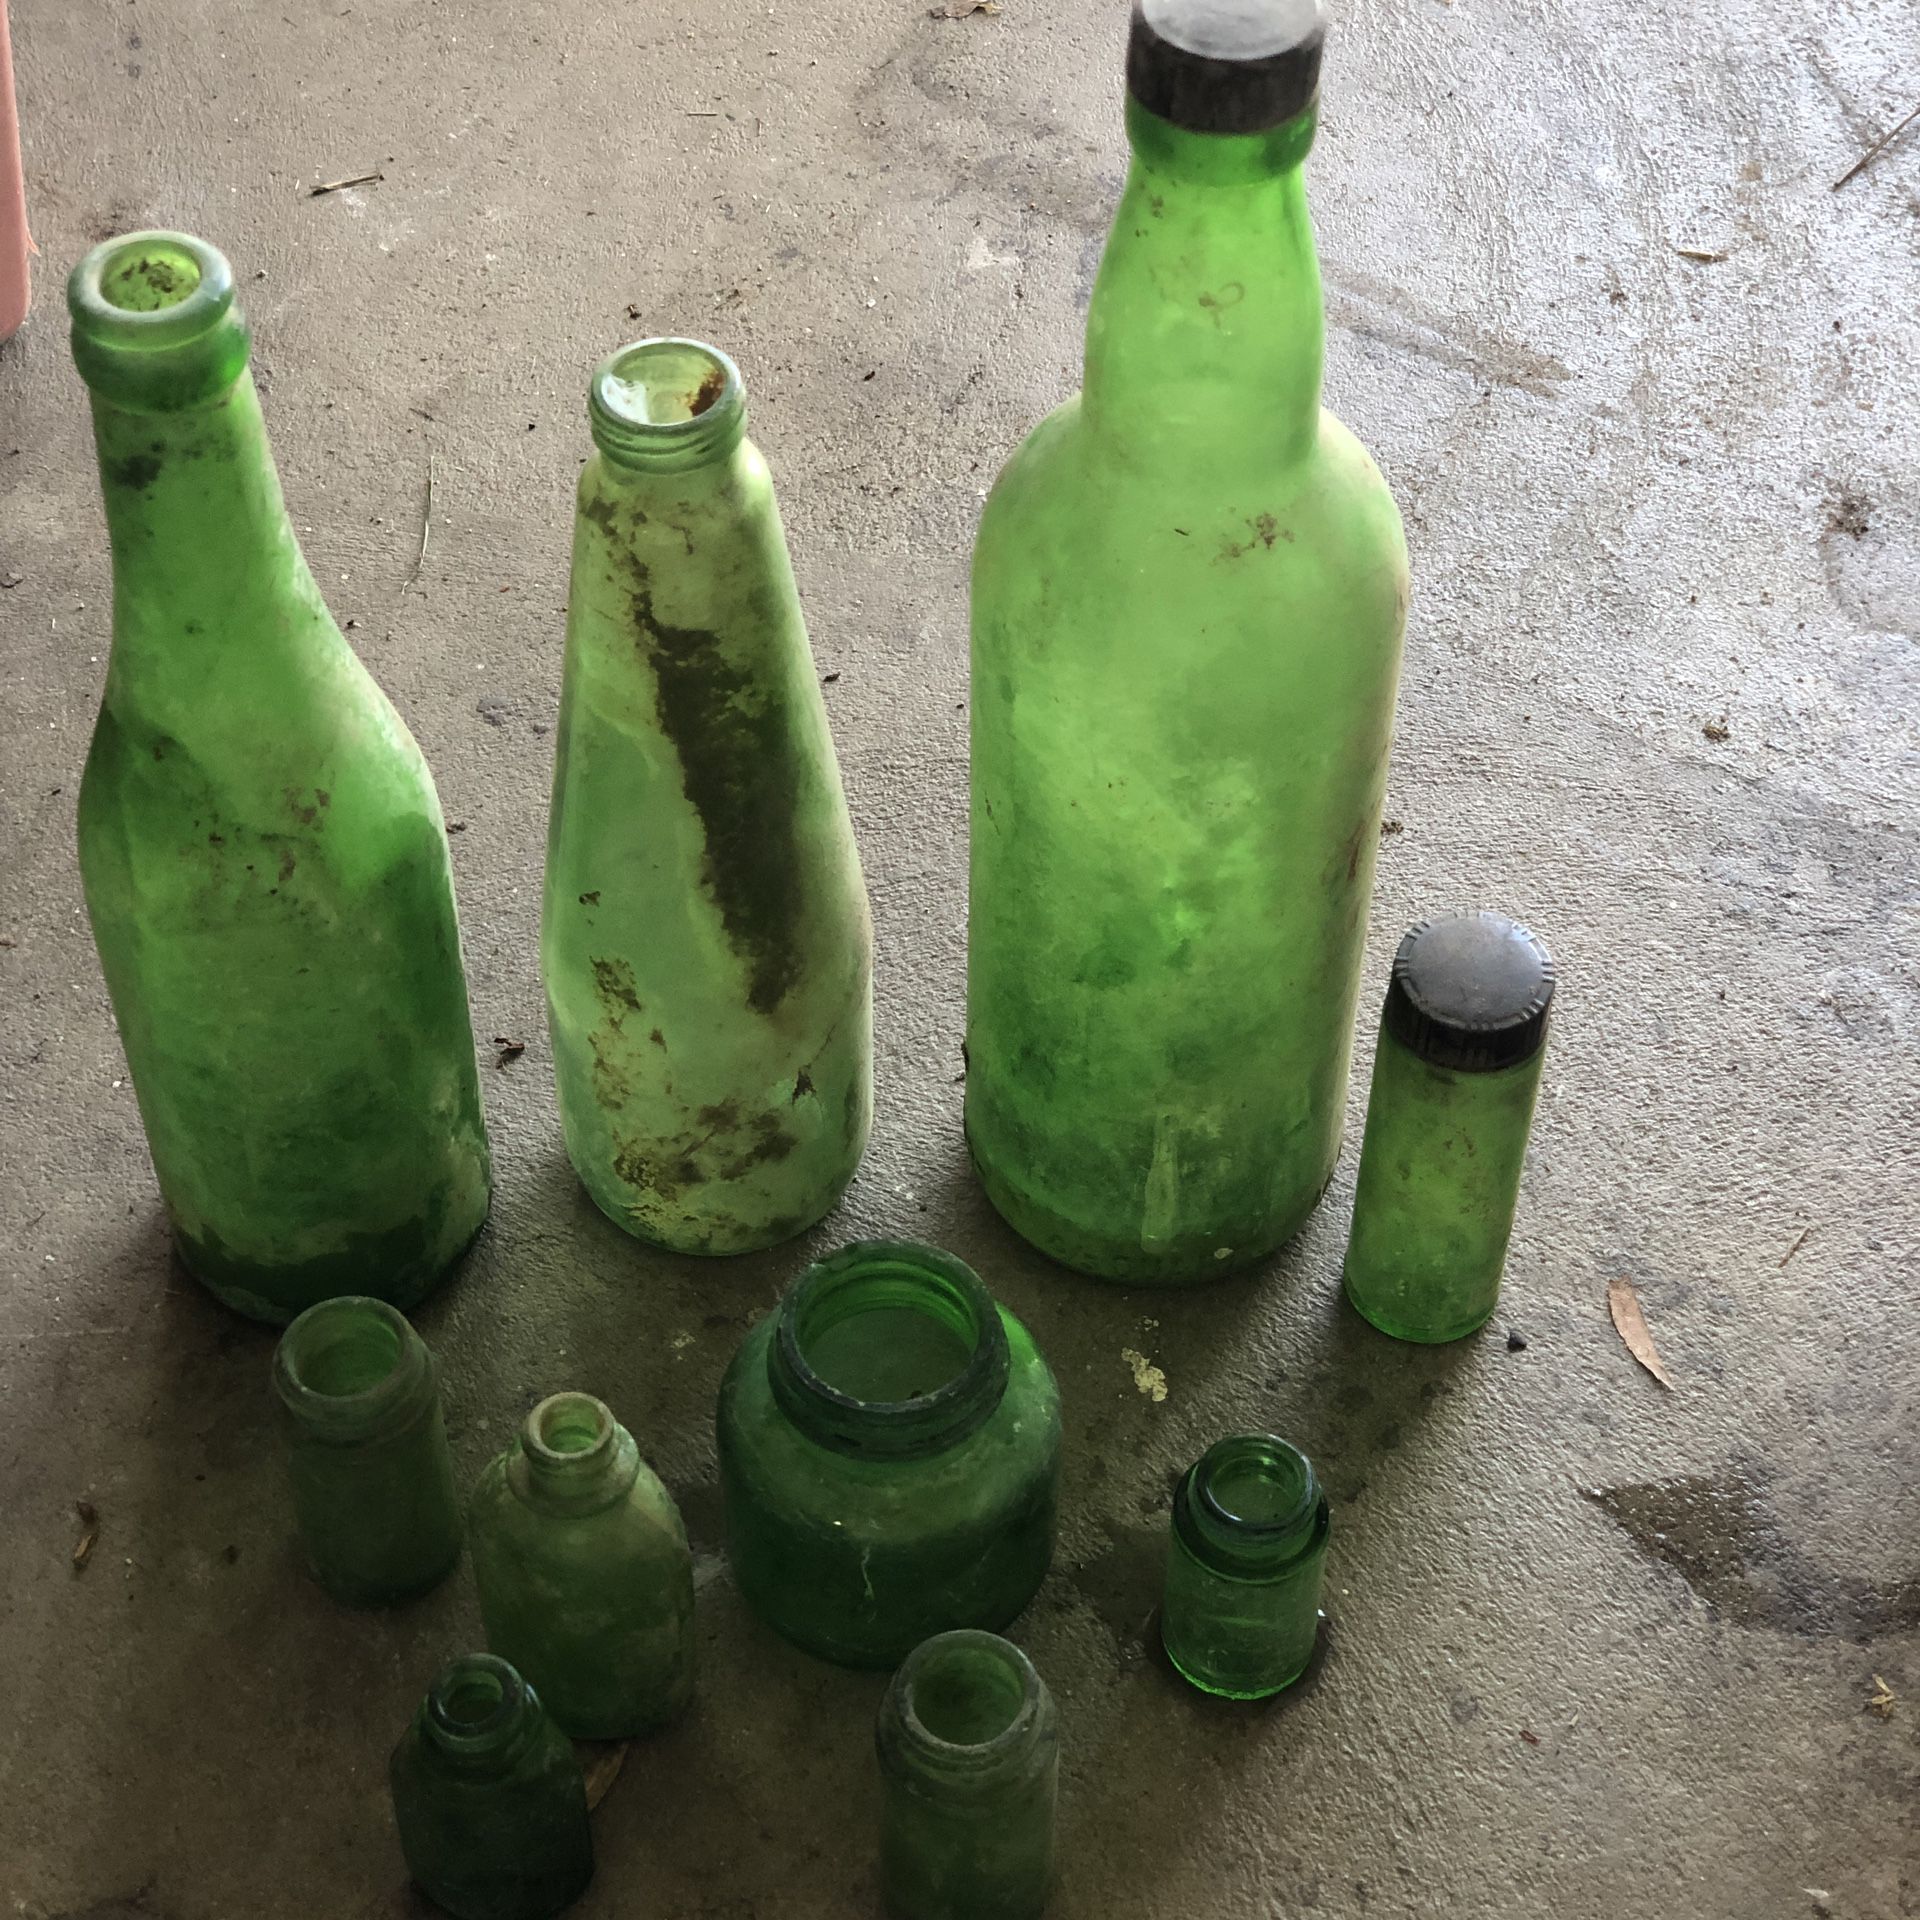 Antique green bottles